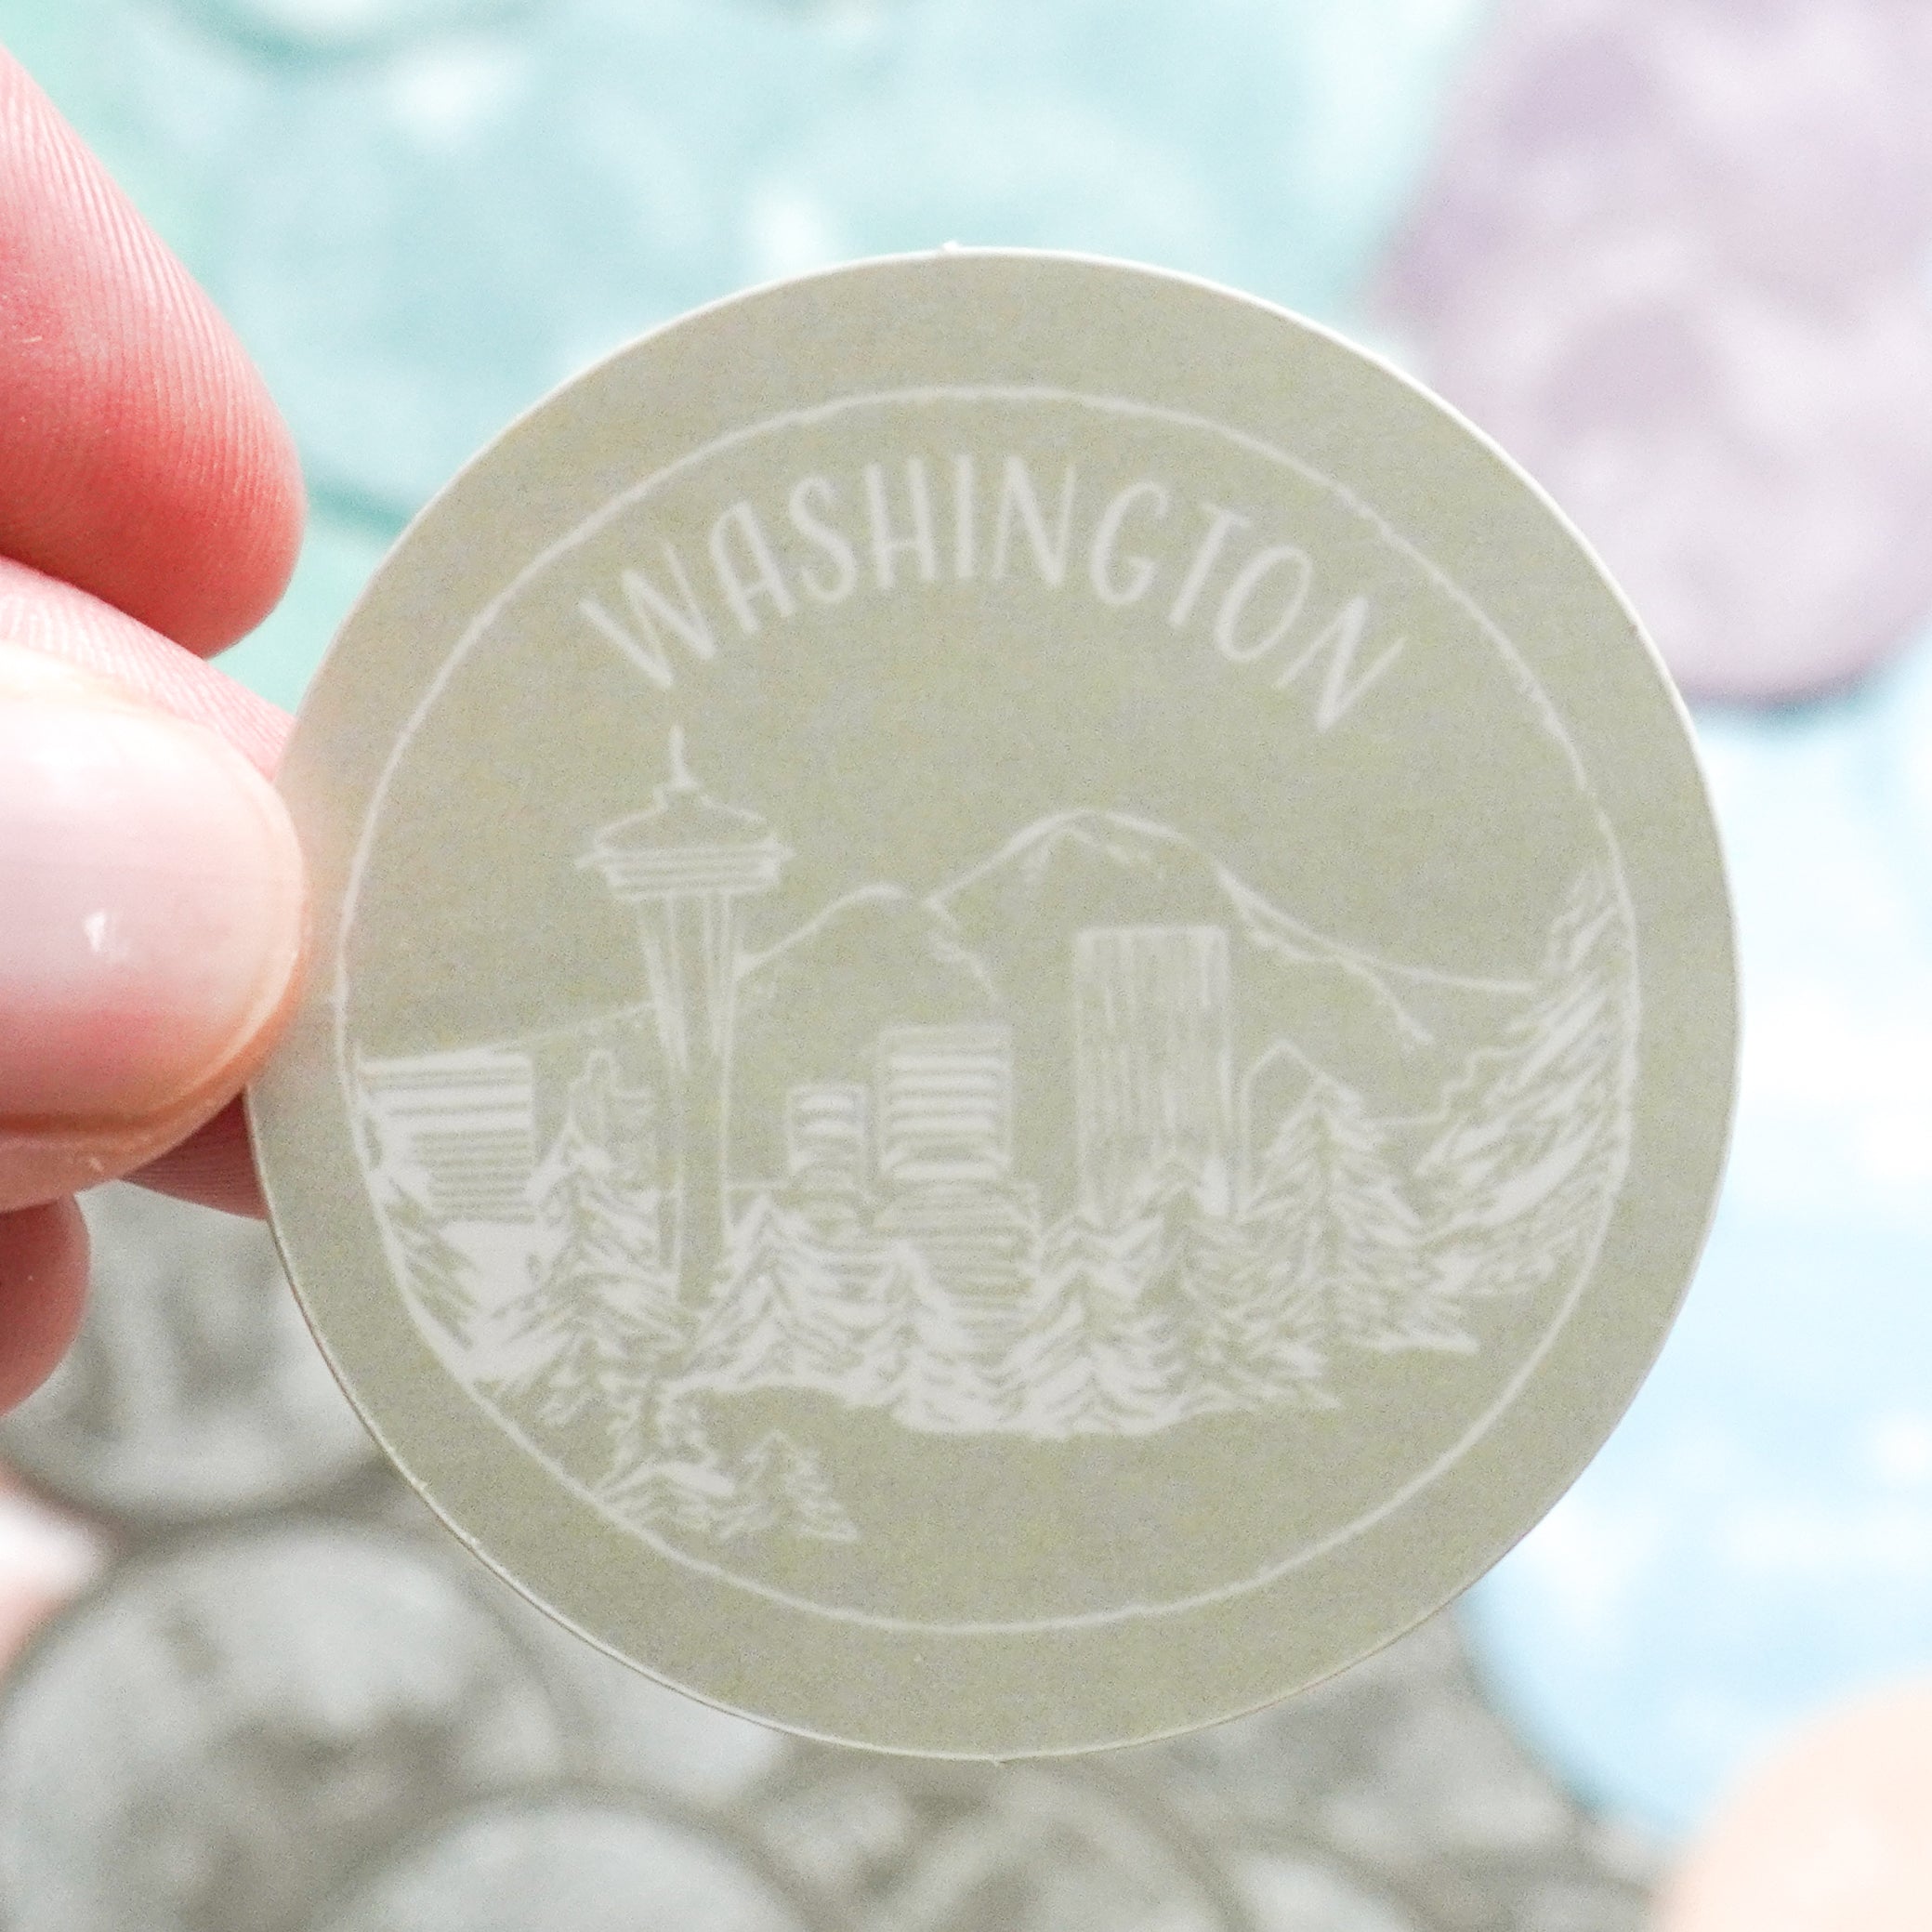 Washington Sticker - Shop Back Home